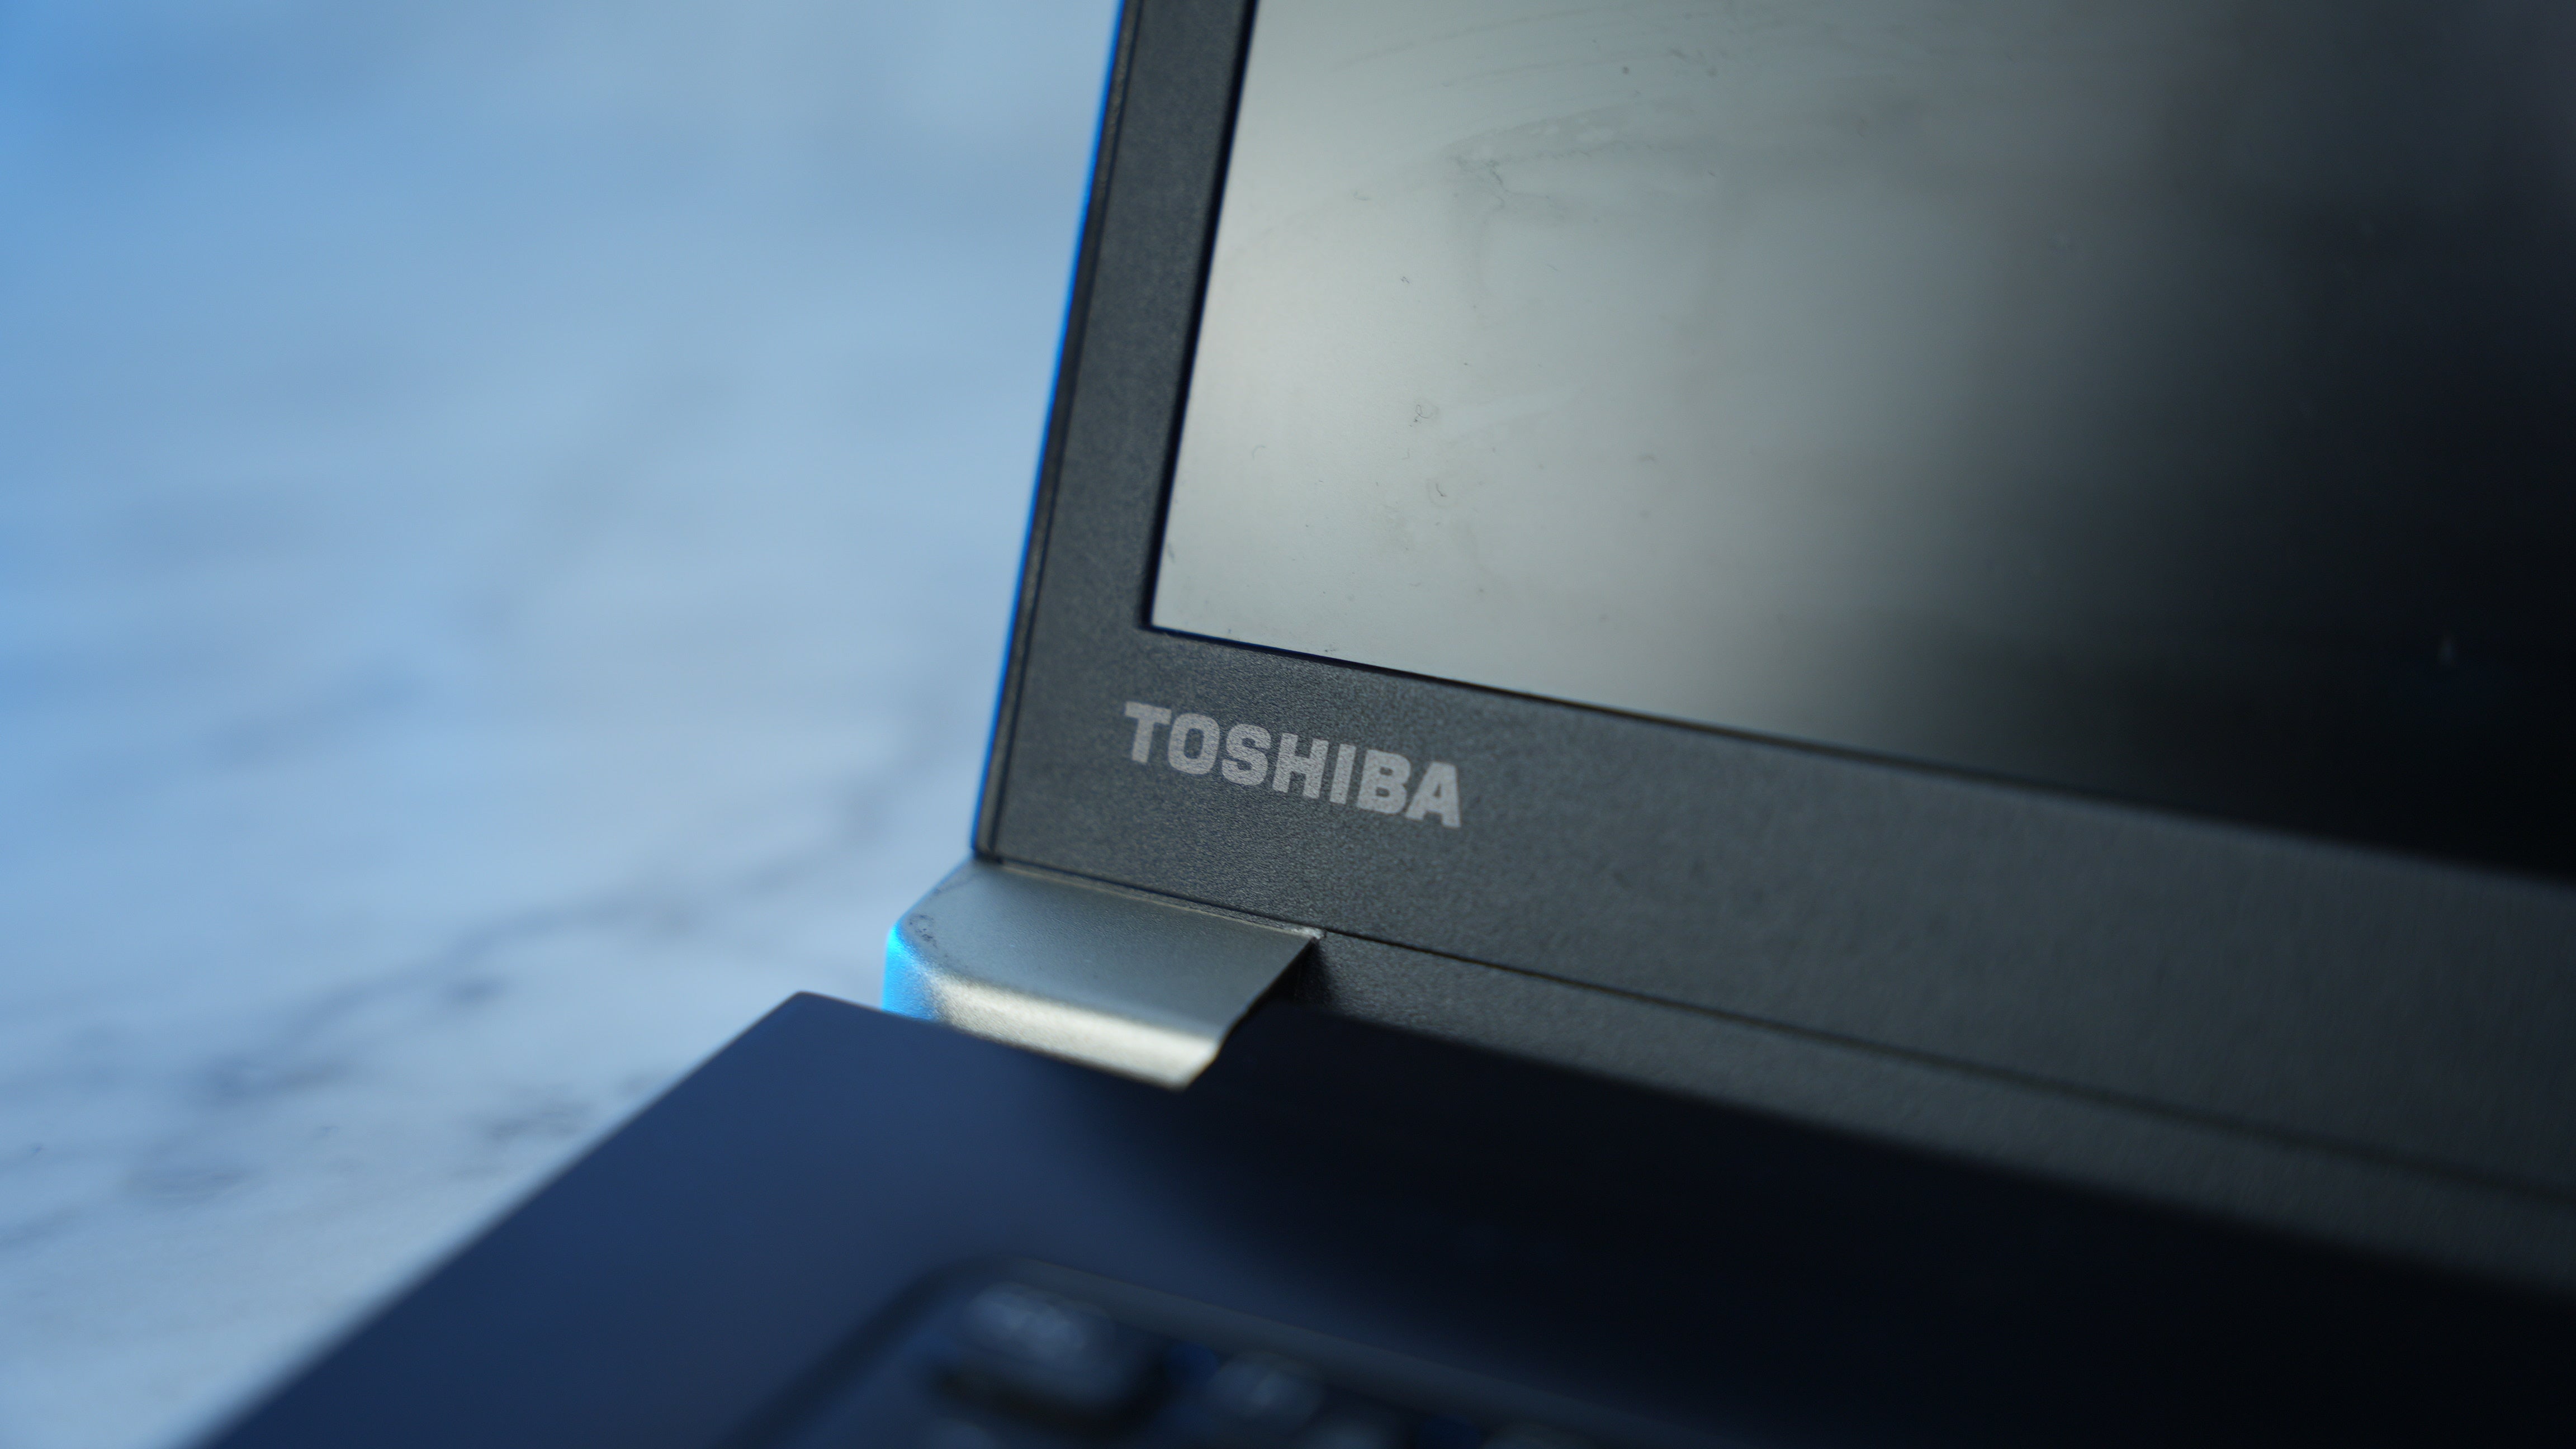 Toshiba Office Laptop - Intel i7 8650U + UHD 620 (In Stock)